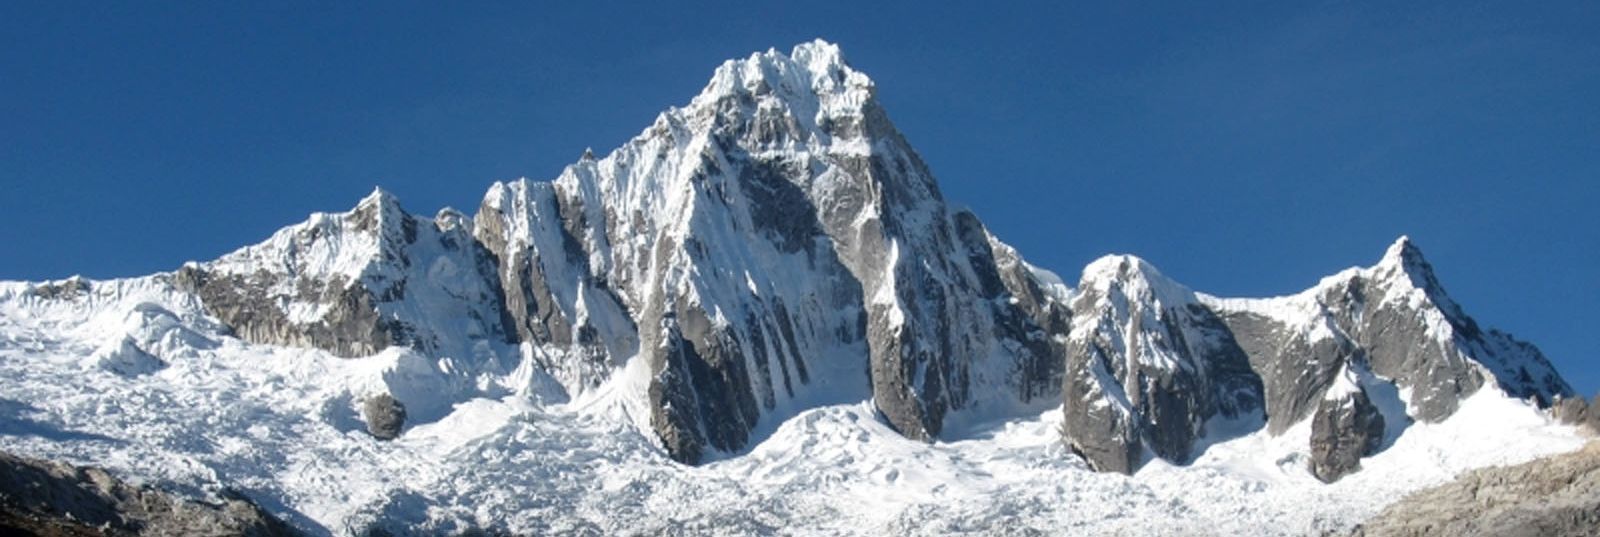 Taulliraju 6035 metres in the Cordillera Blanca of the Peru Andes